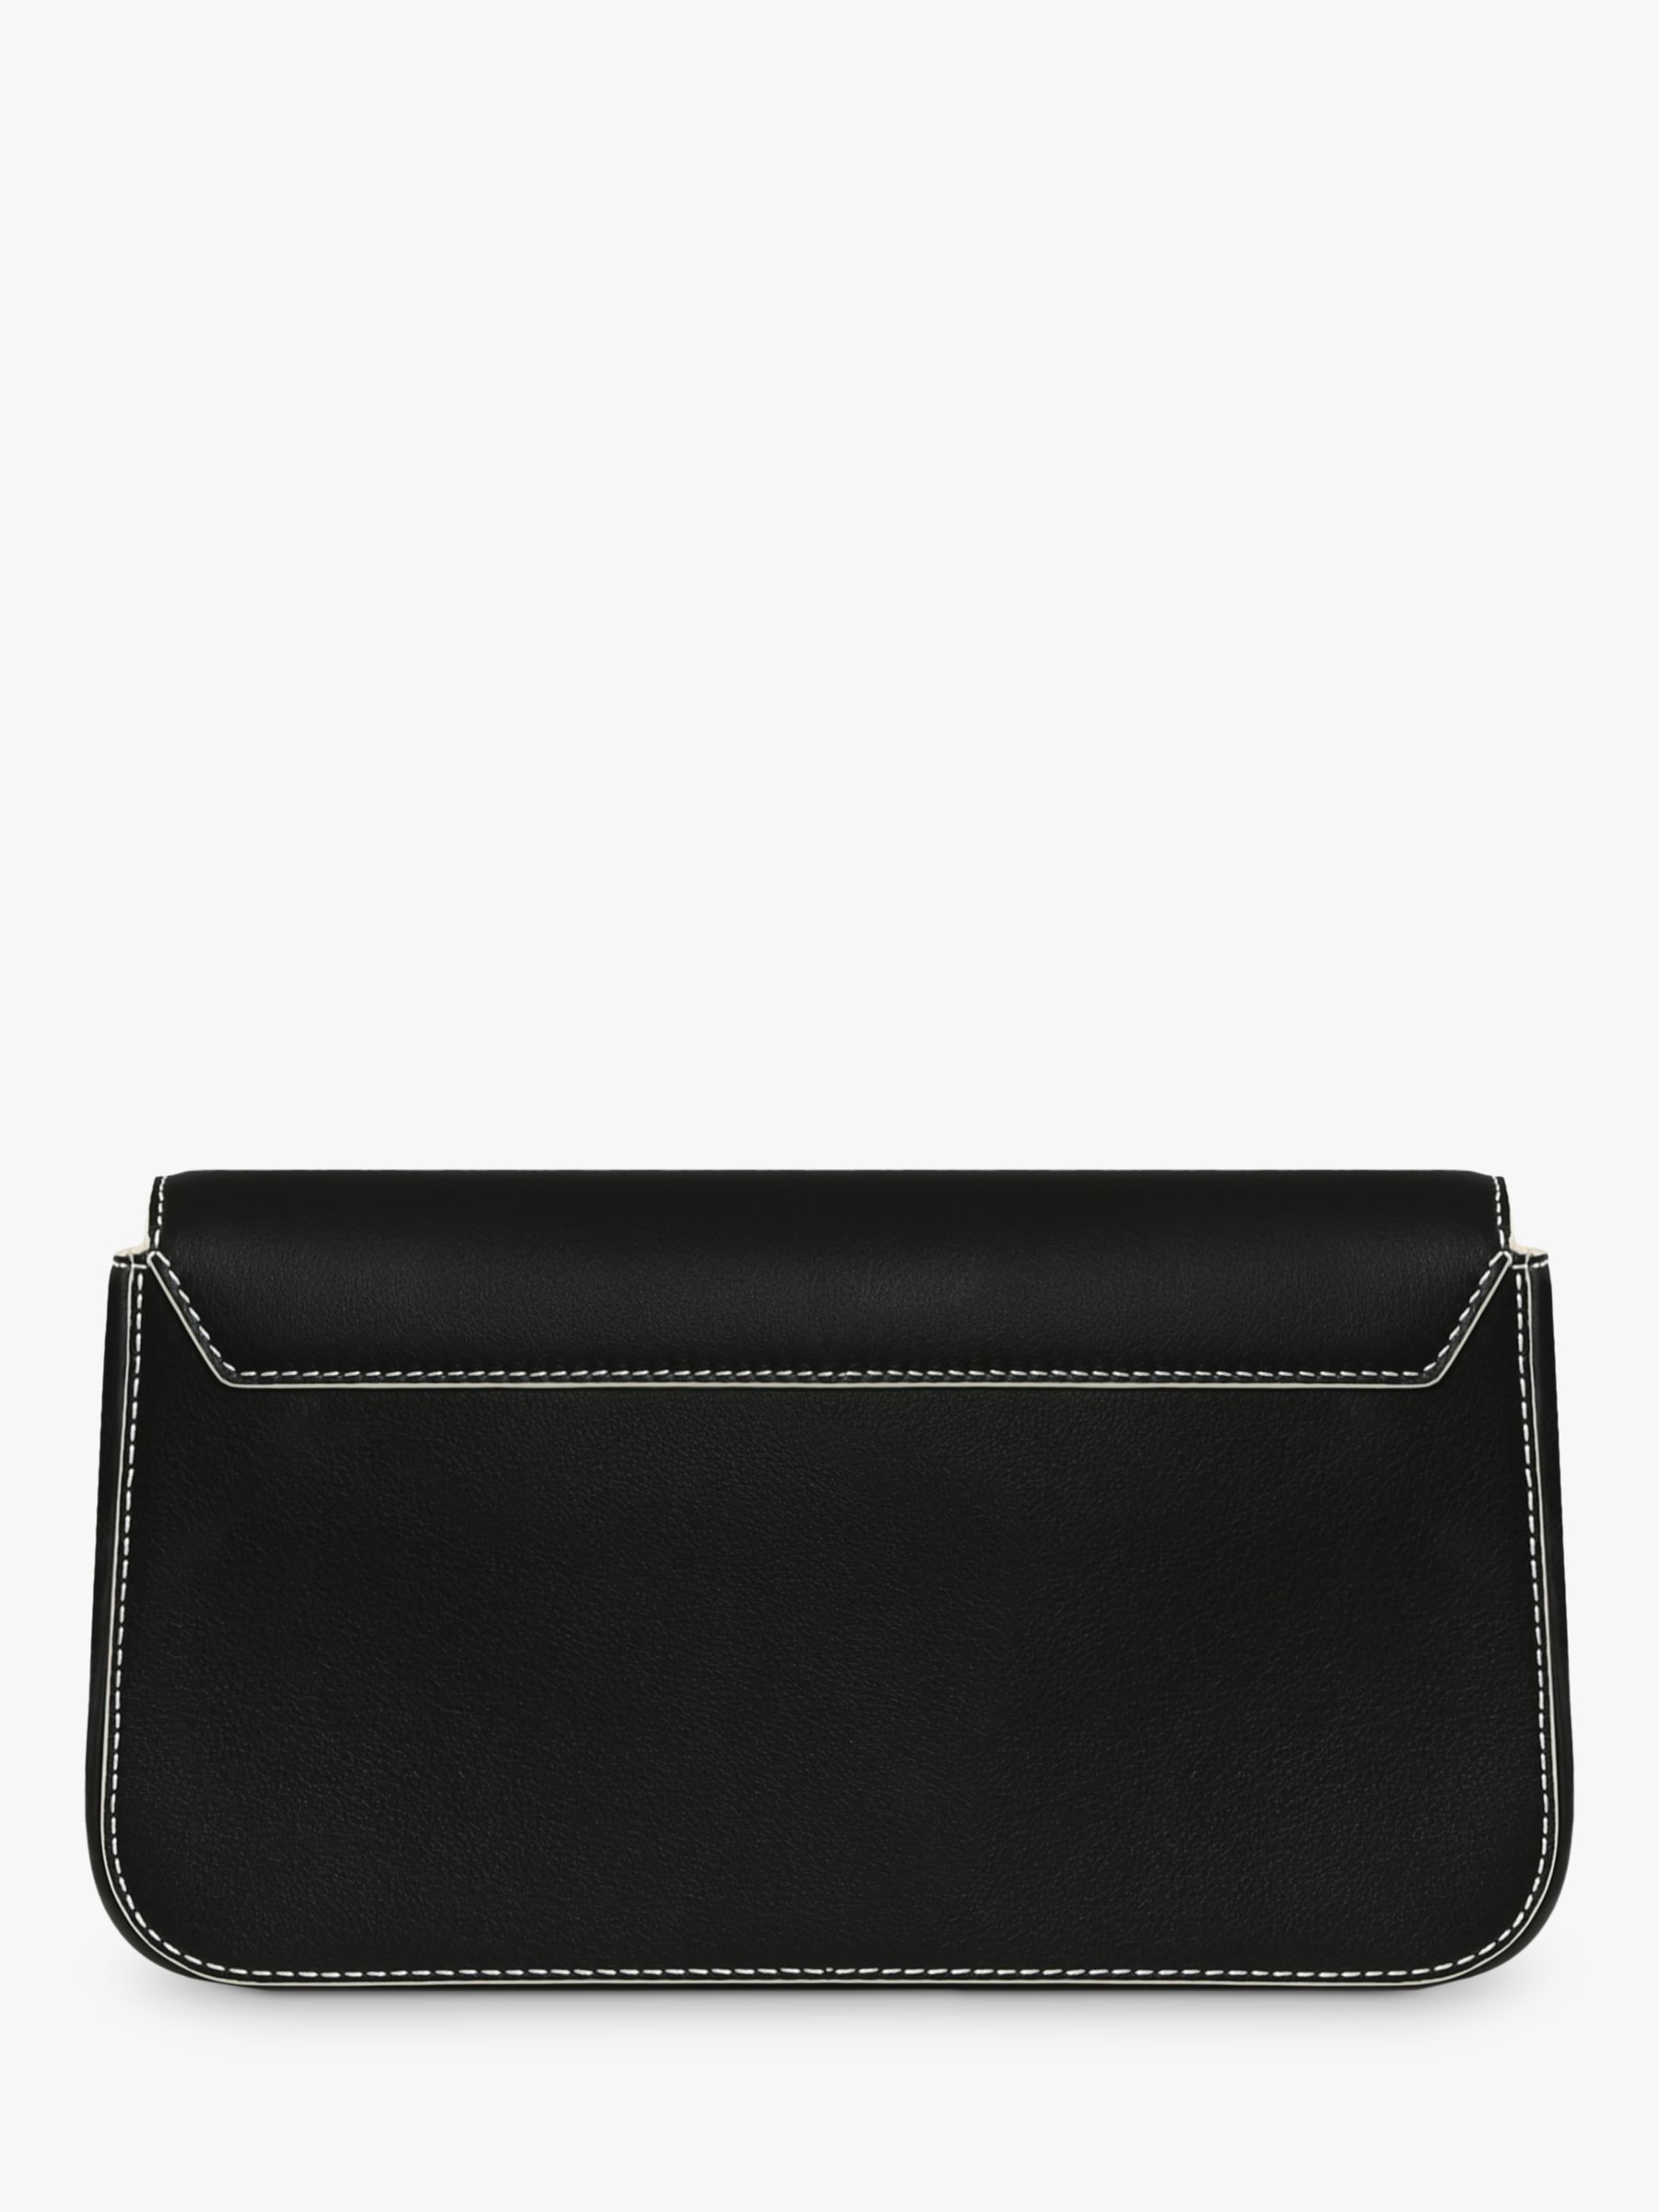 Strathberry East/West Omni Leather Clutch Bag, Black